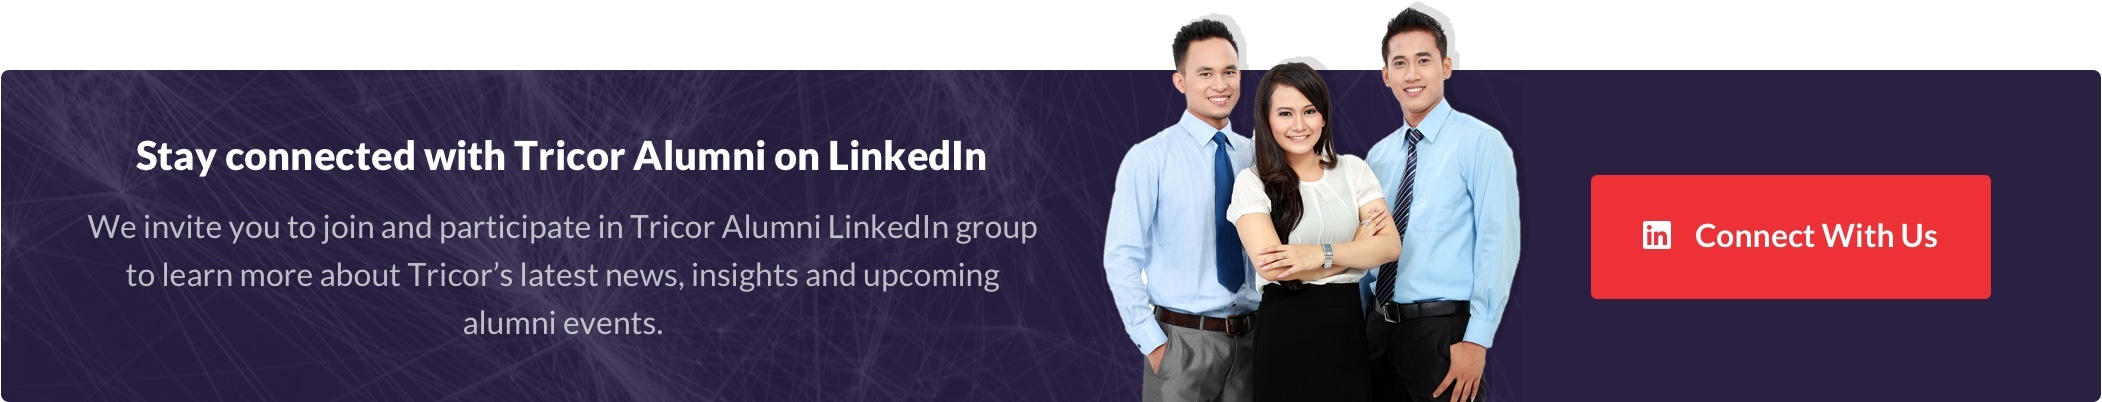 Tricor Alumni LinkedIn